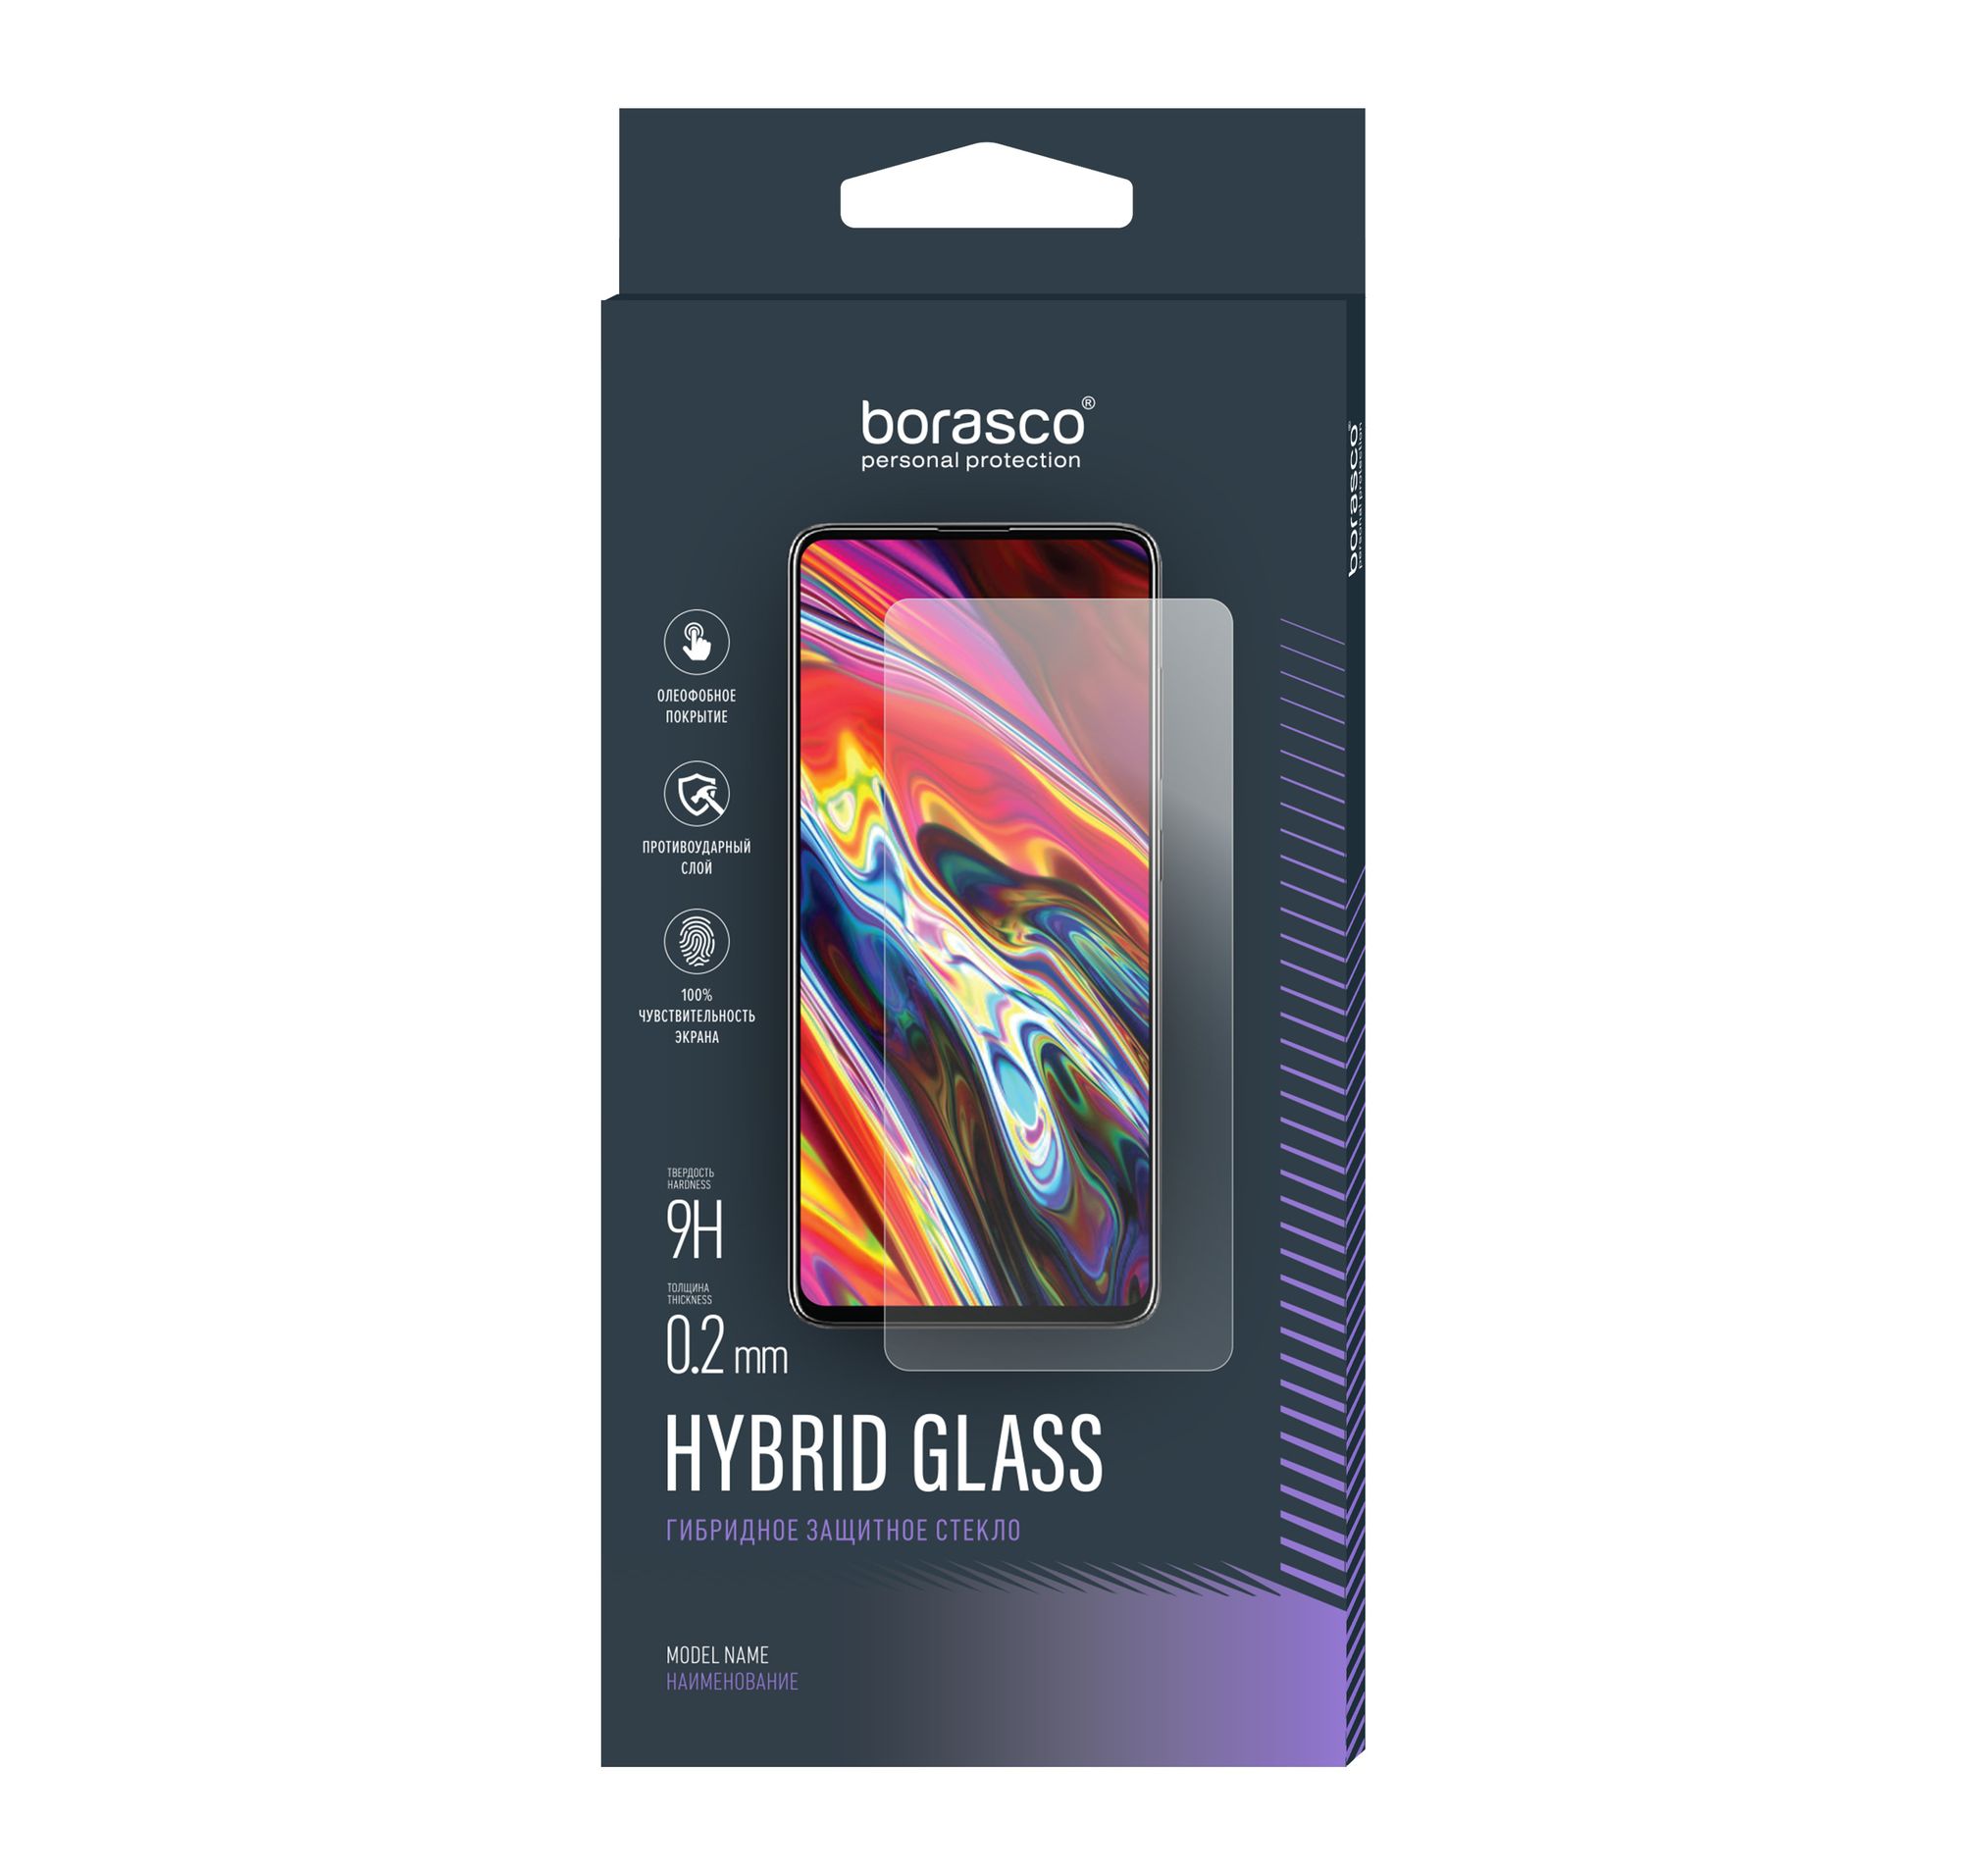 Стекло защитное Hybrid Glass VSP 0,26 мм для Sony Xperia X Performance/ X Performance dual стекло модуля для sony h3113 xperia xa2 h4113 xperia xa2 dual черный aaa